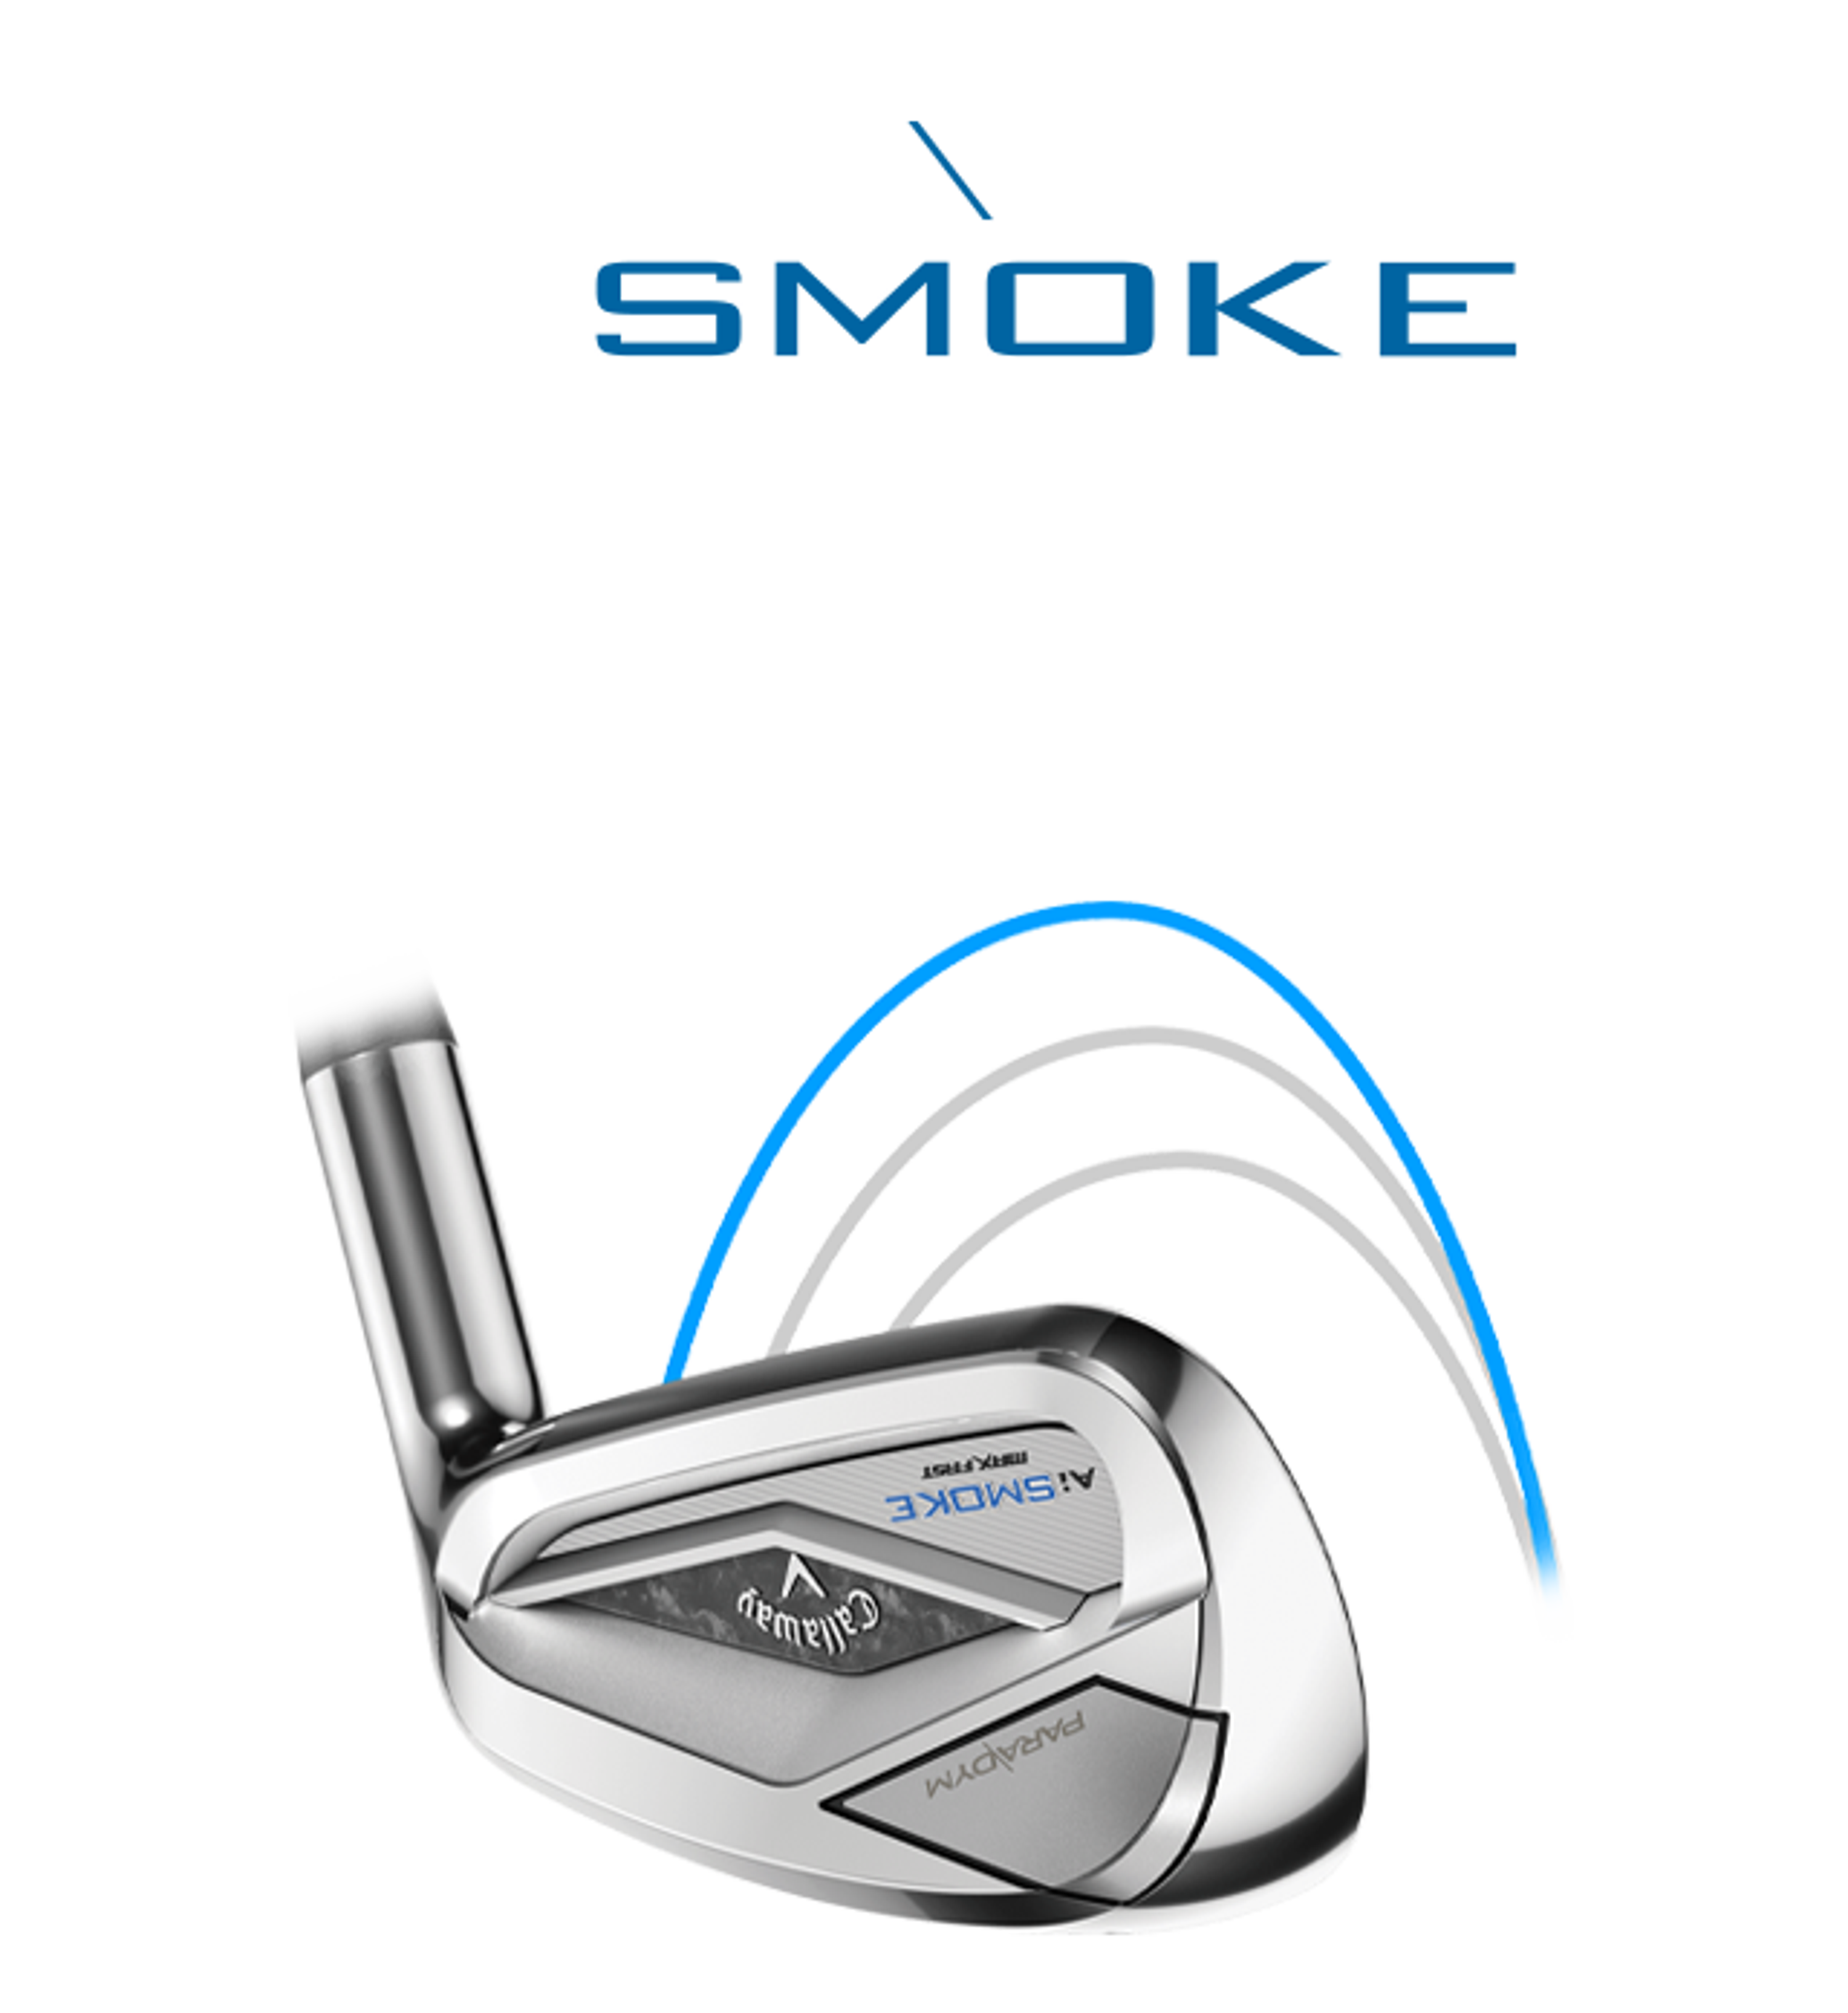 ai smoke max fast iron face - lightweight performance